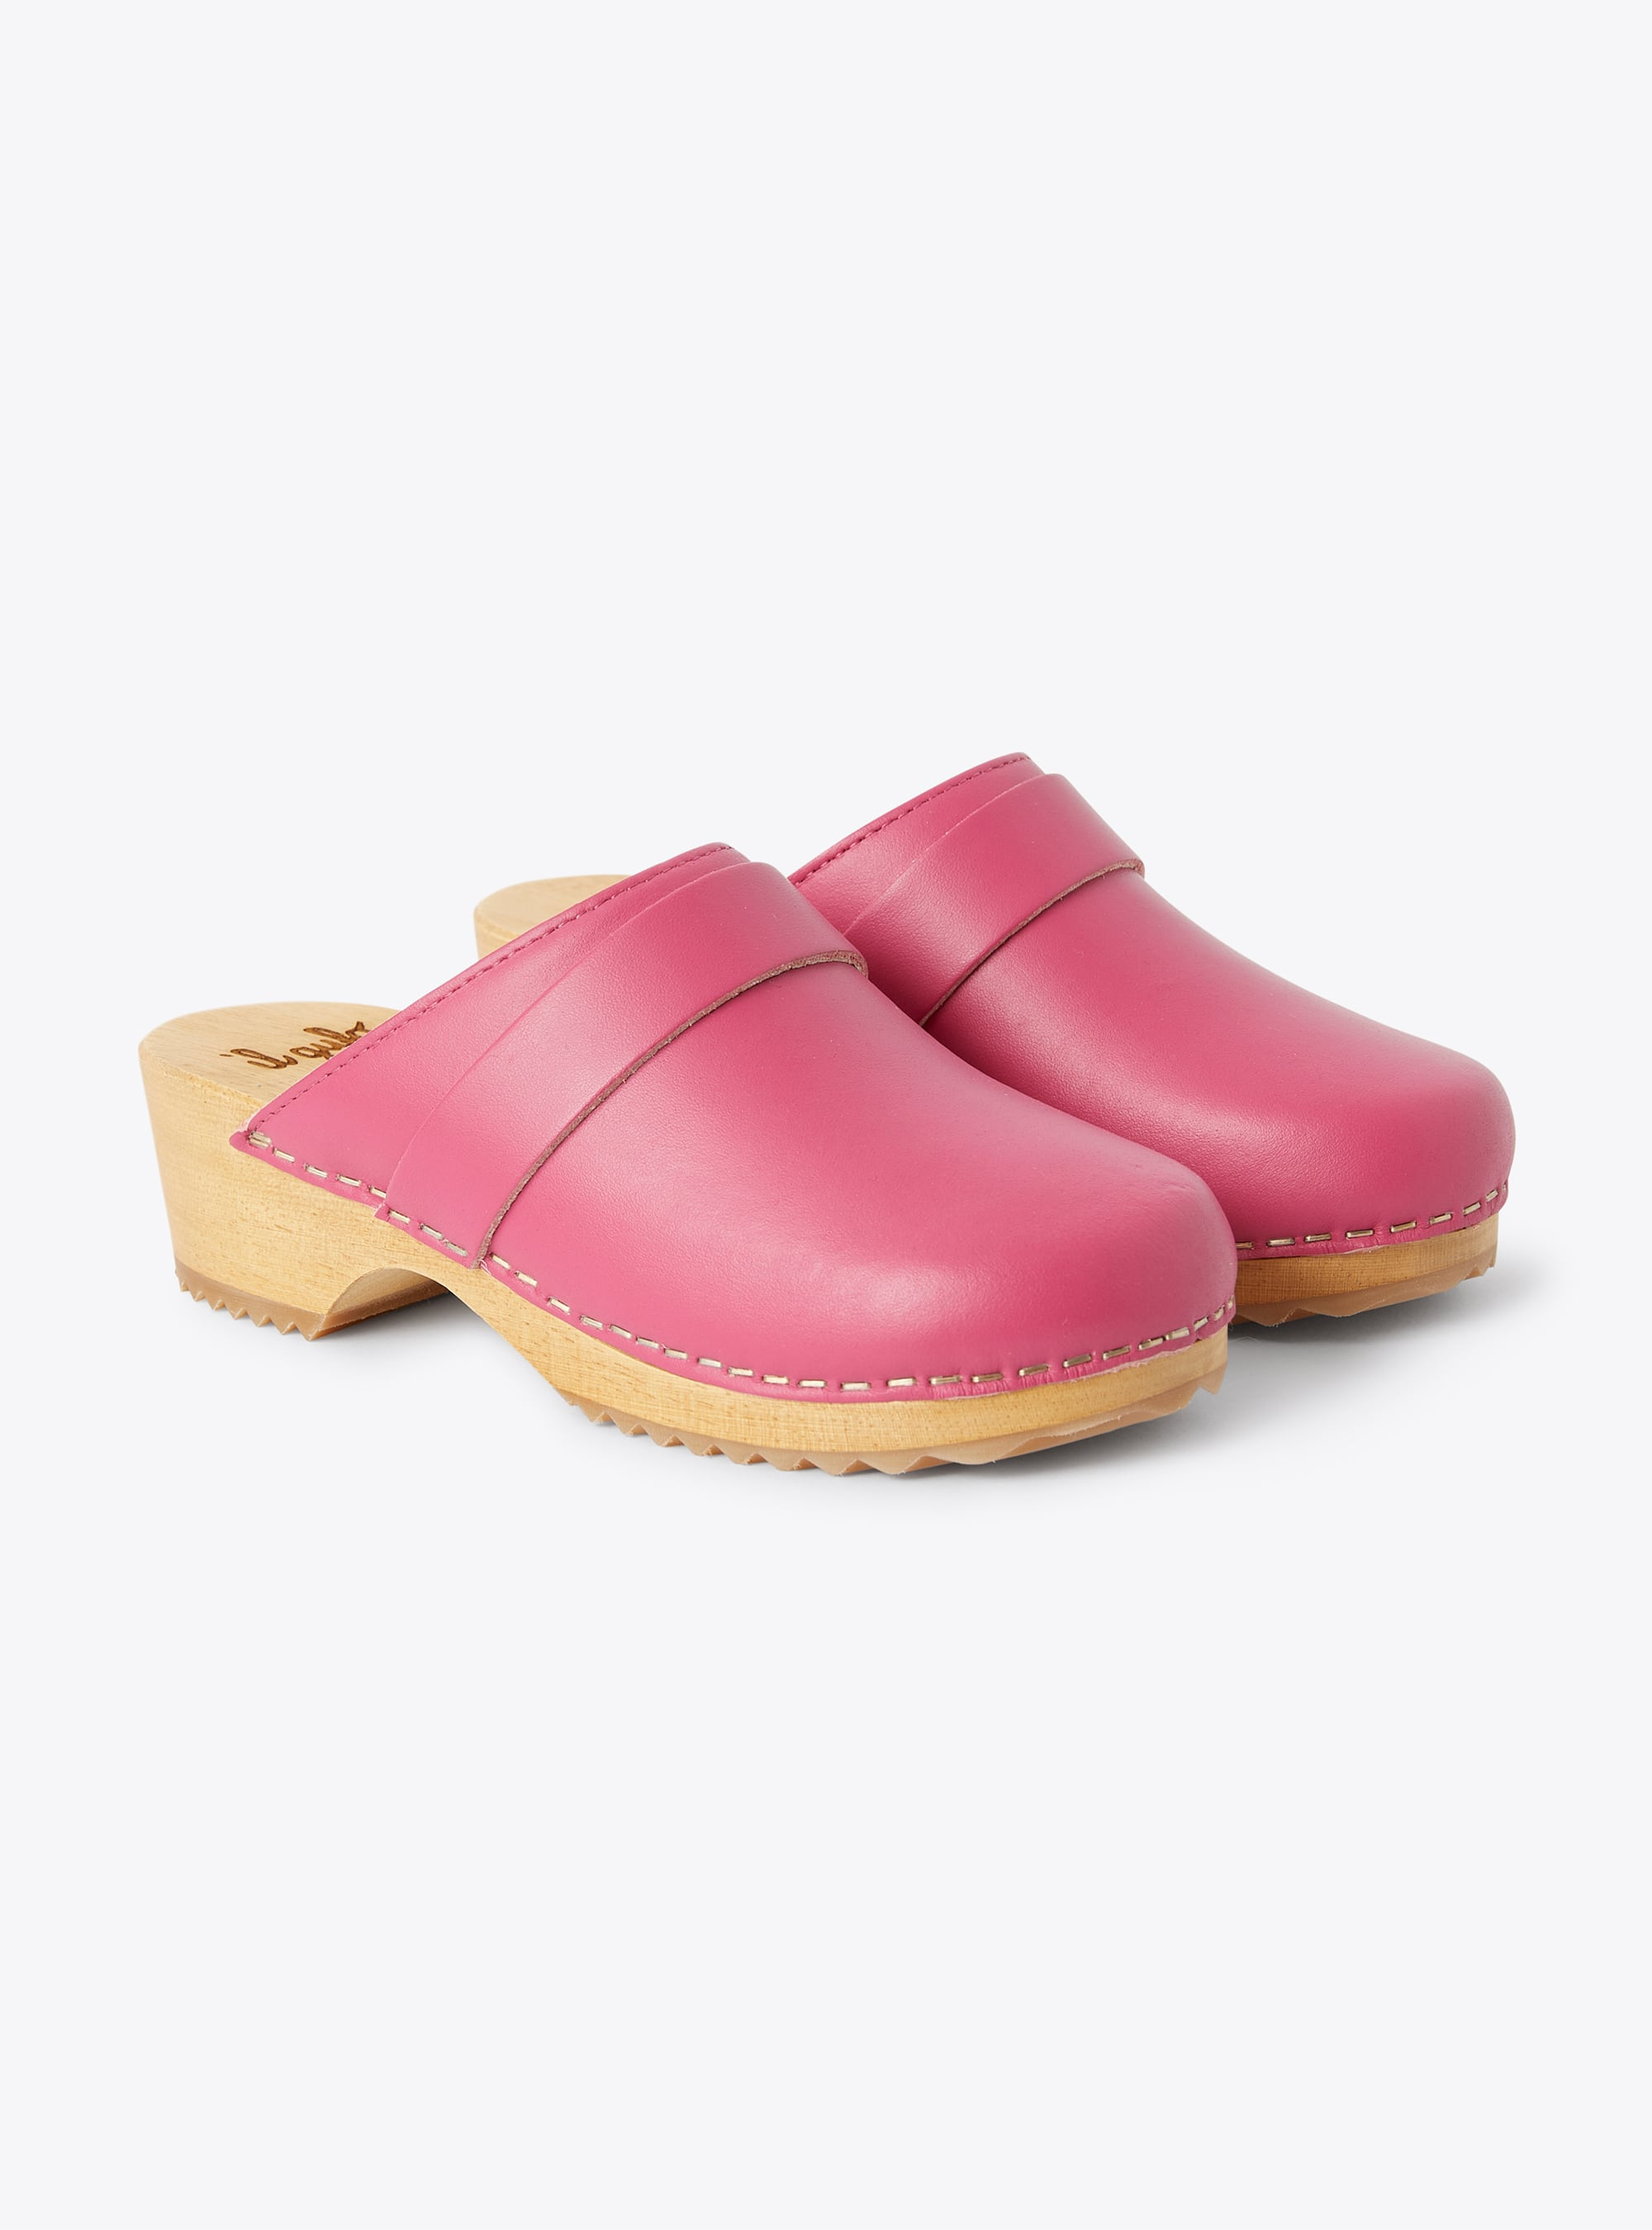 Holzschuhe aus pinkfarbenem Leder - Schuhe - Il Gufo